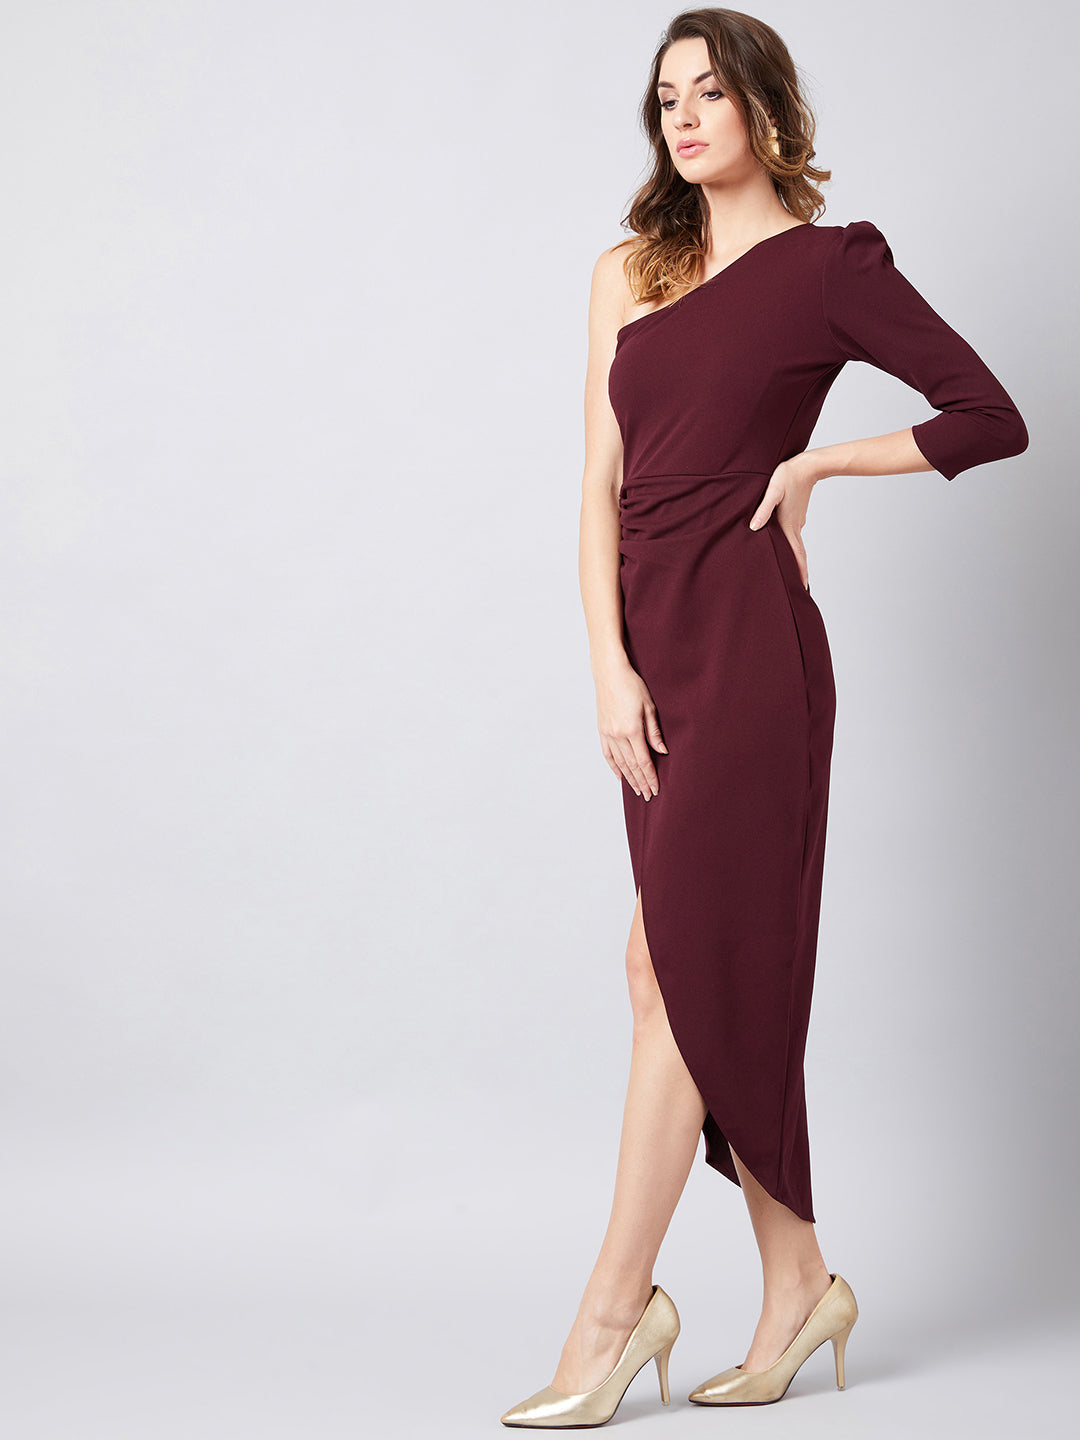 Athena Burgundy Pleated Wrap Dress - Athena Lifestyle